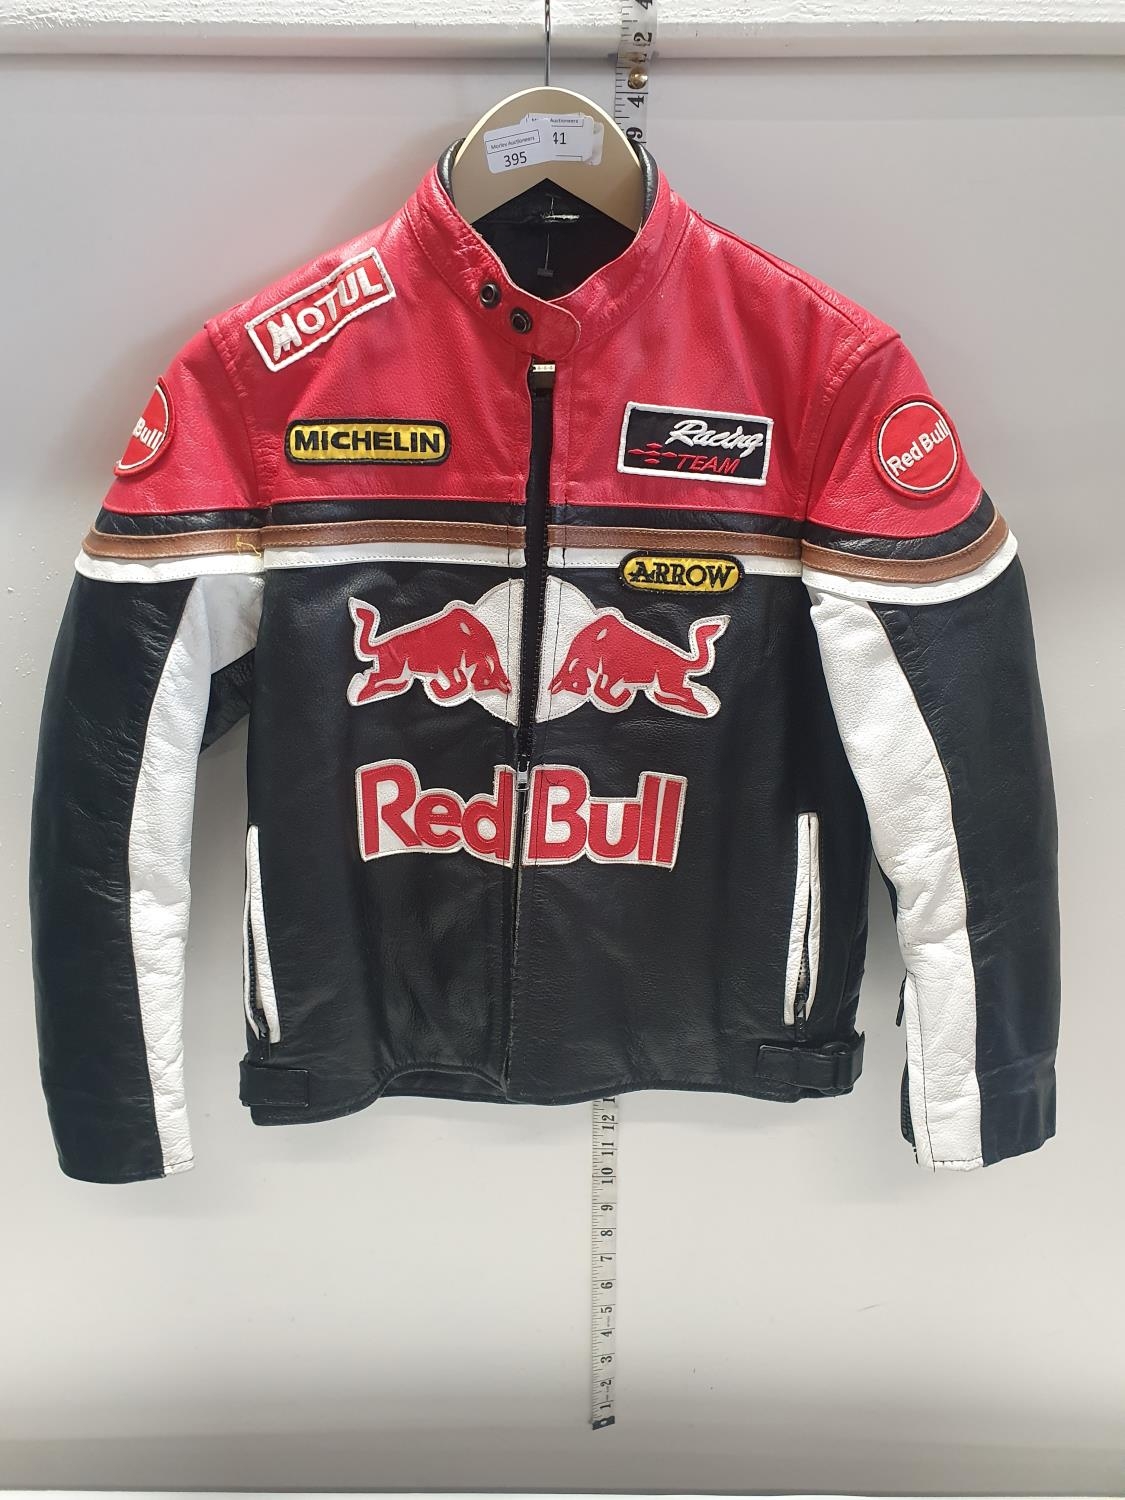 A motorcycle jacket